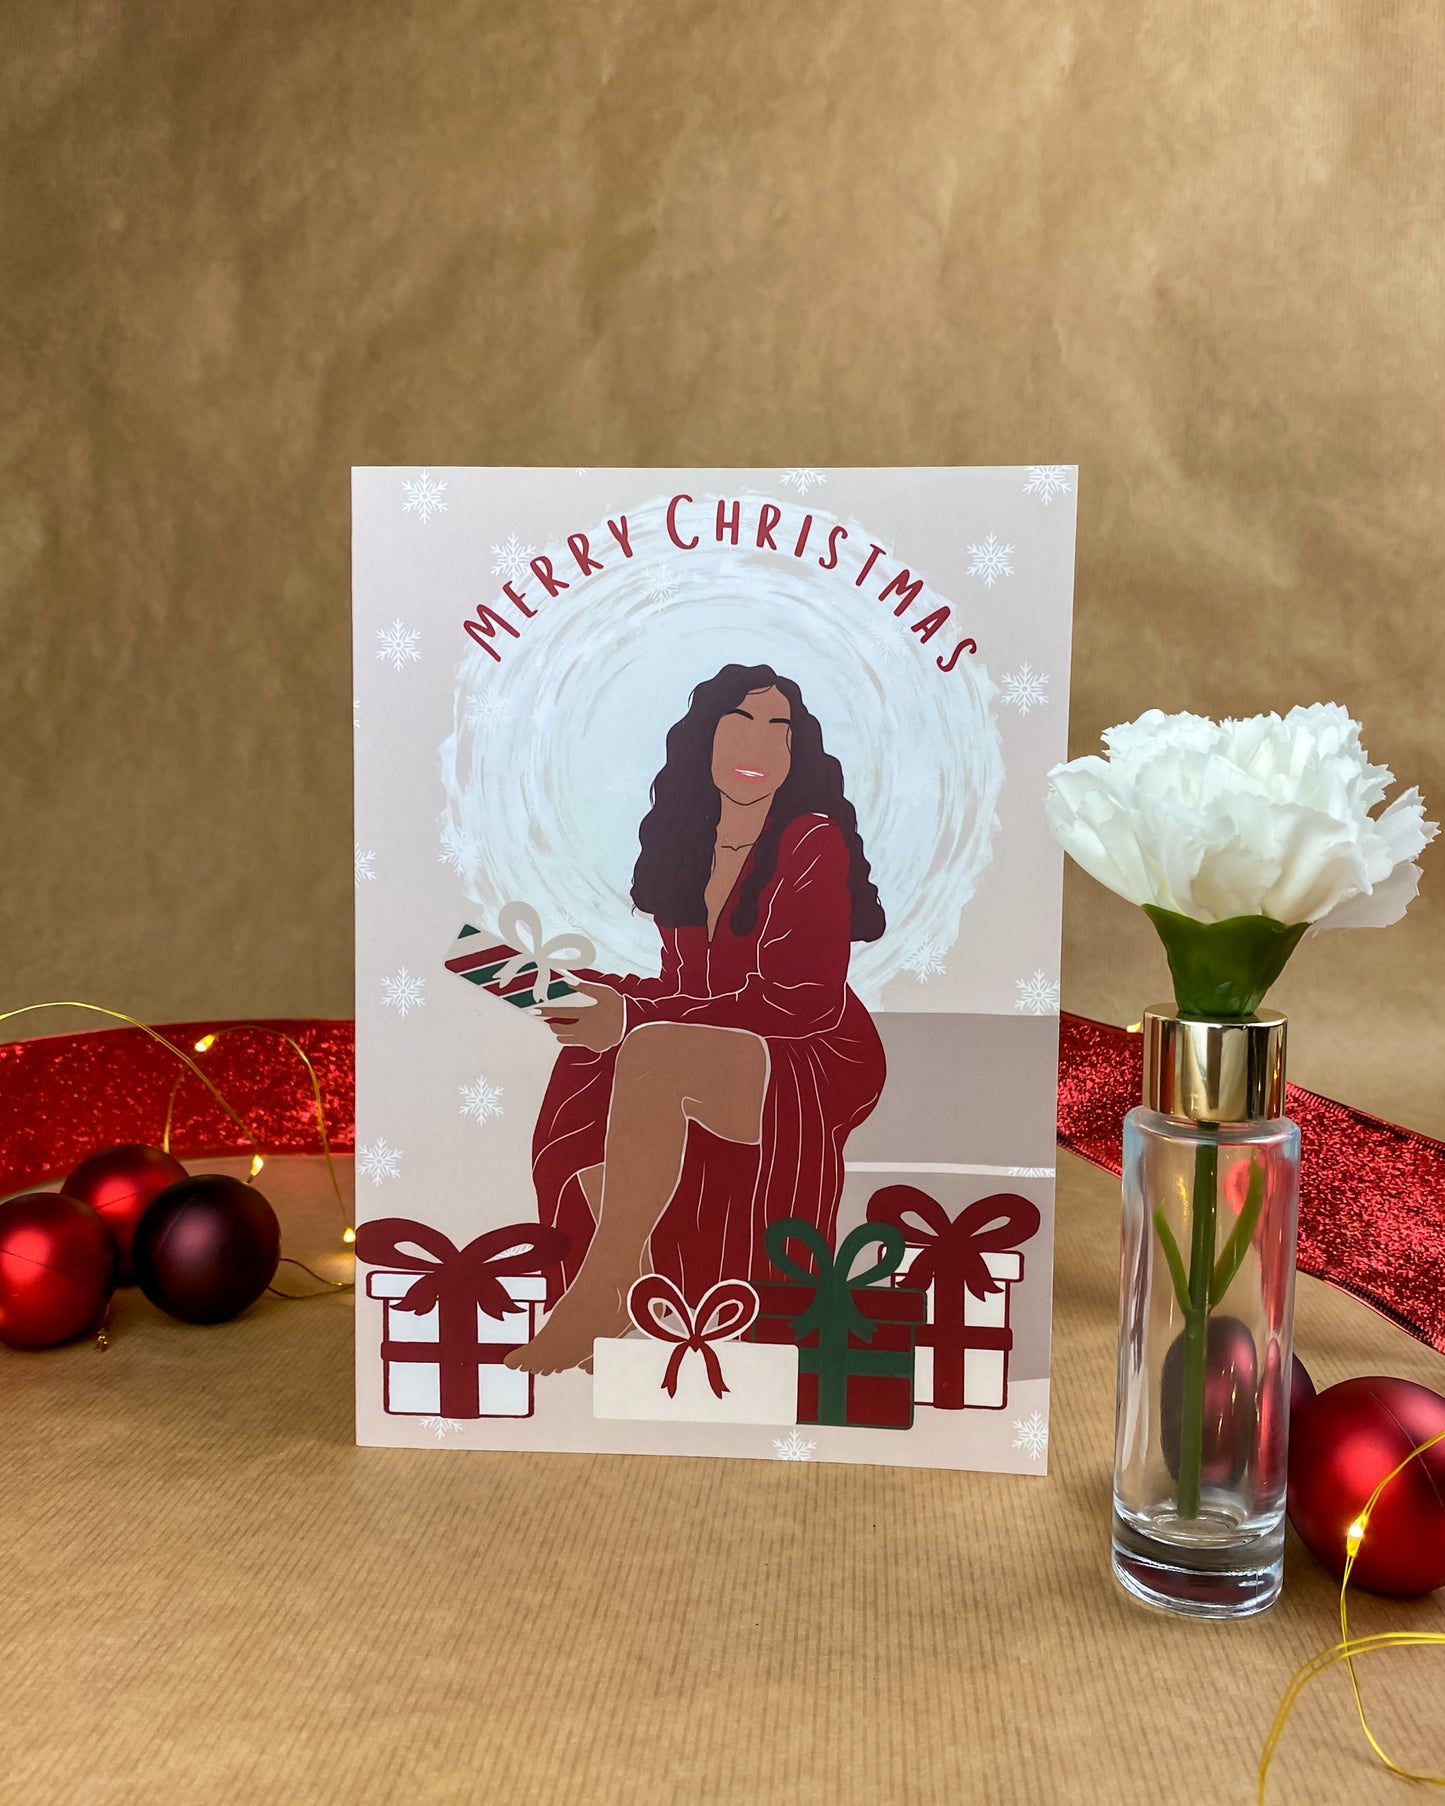 Black Christmas Gift, Seasons Greetings - Black Christmas Card